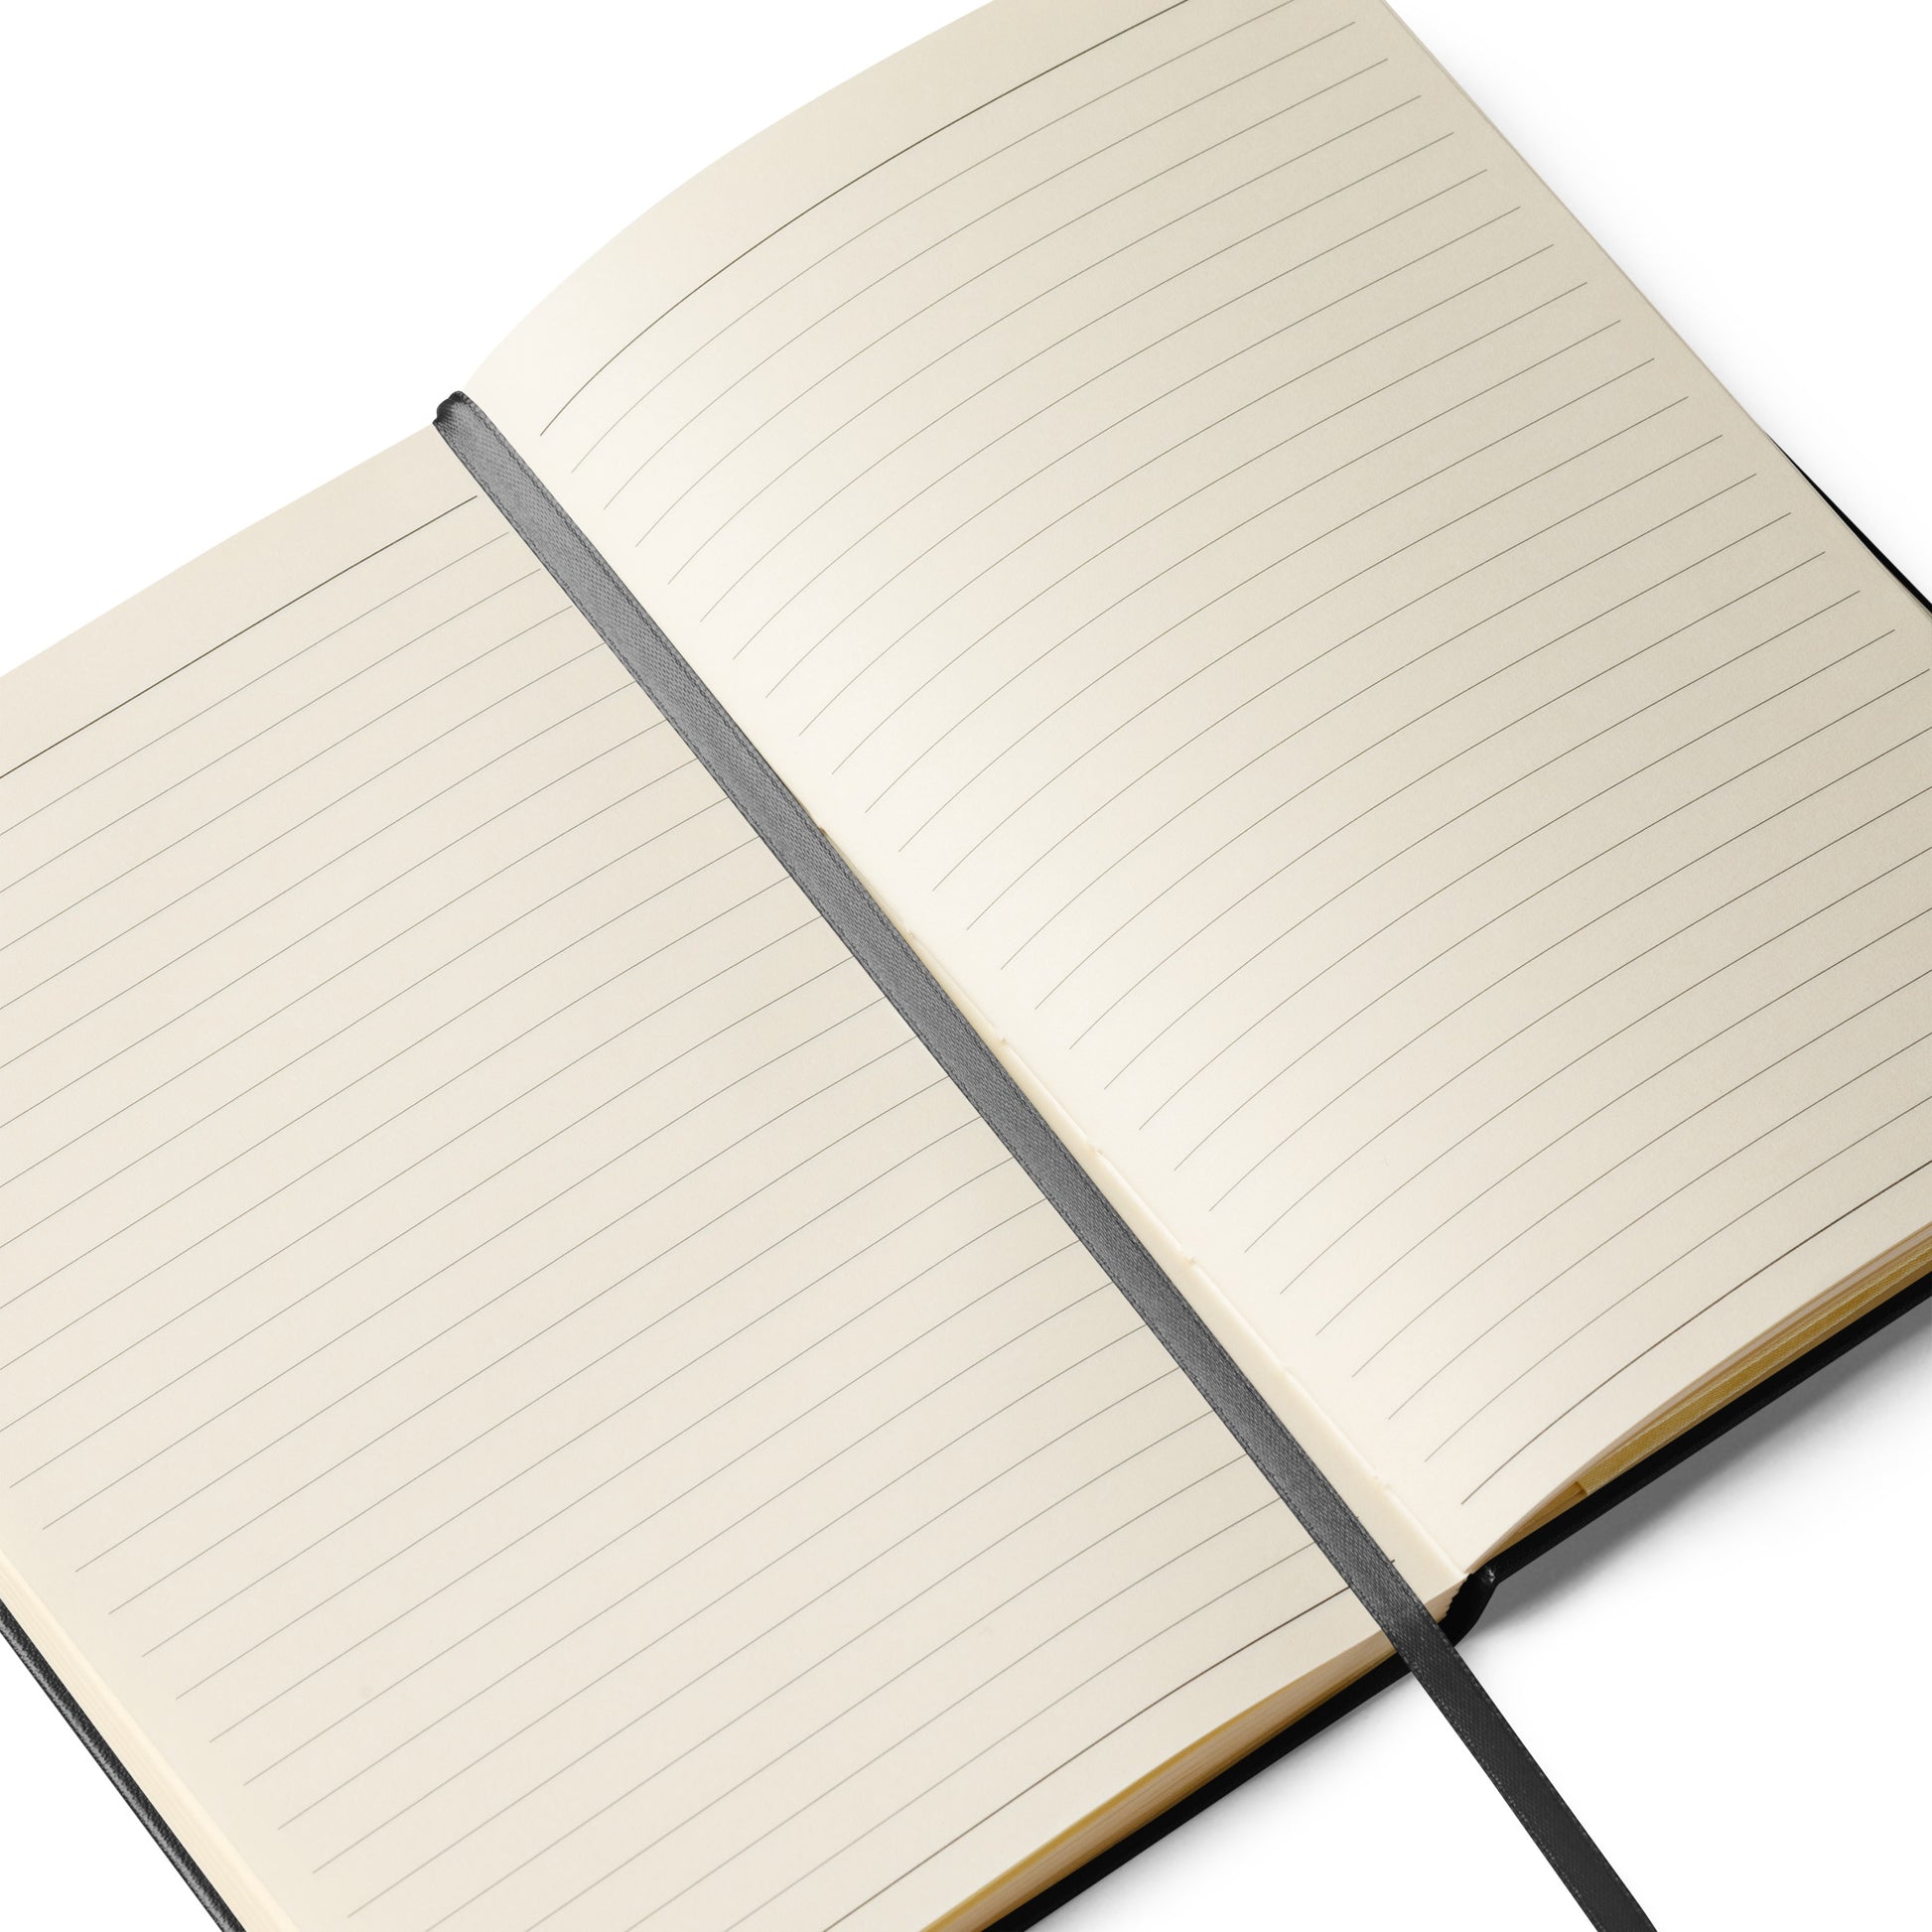 Hardcover bound notebook CedarHill Country Market